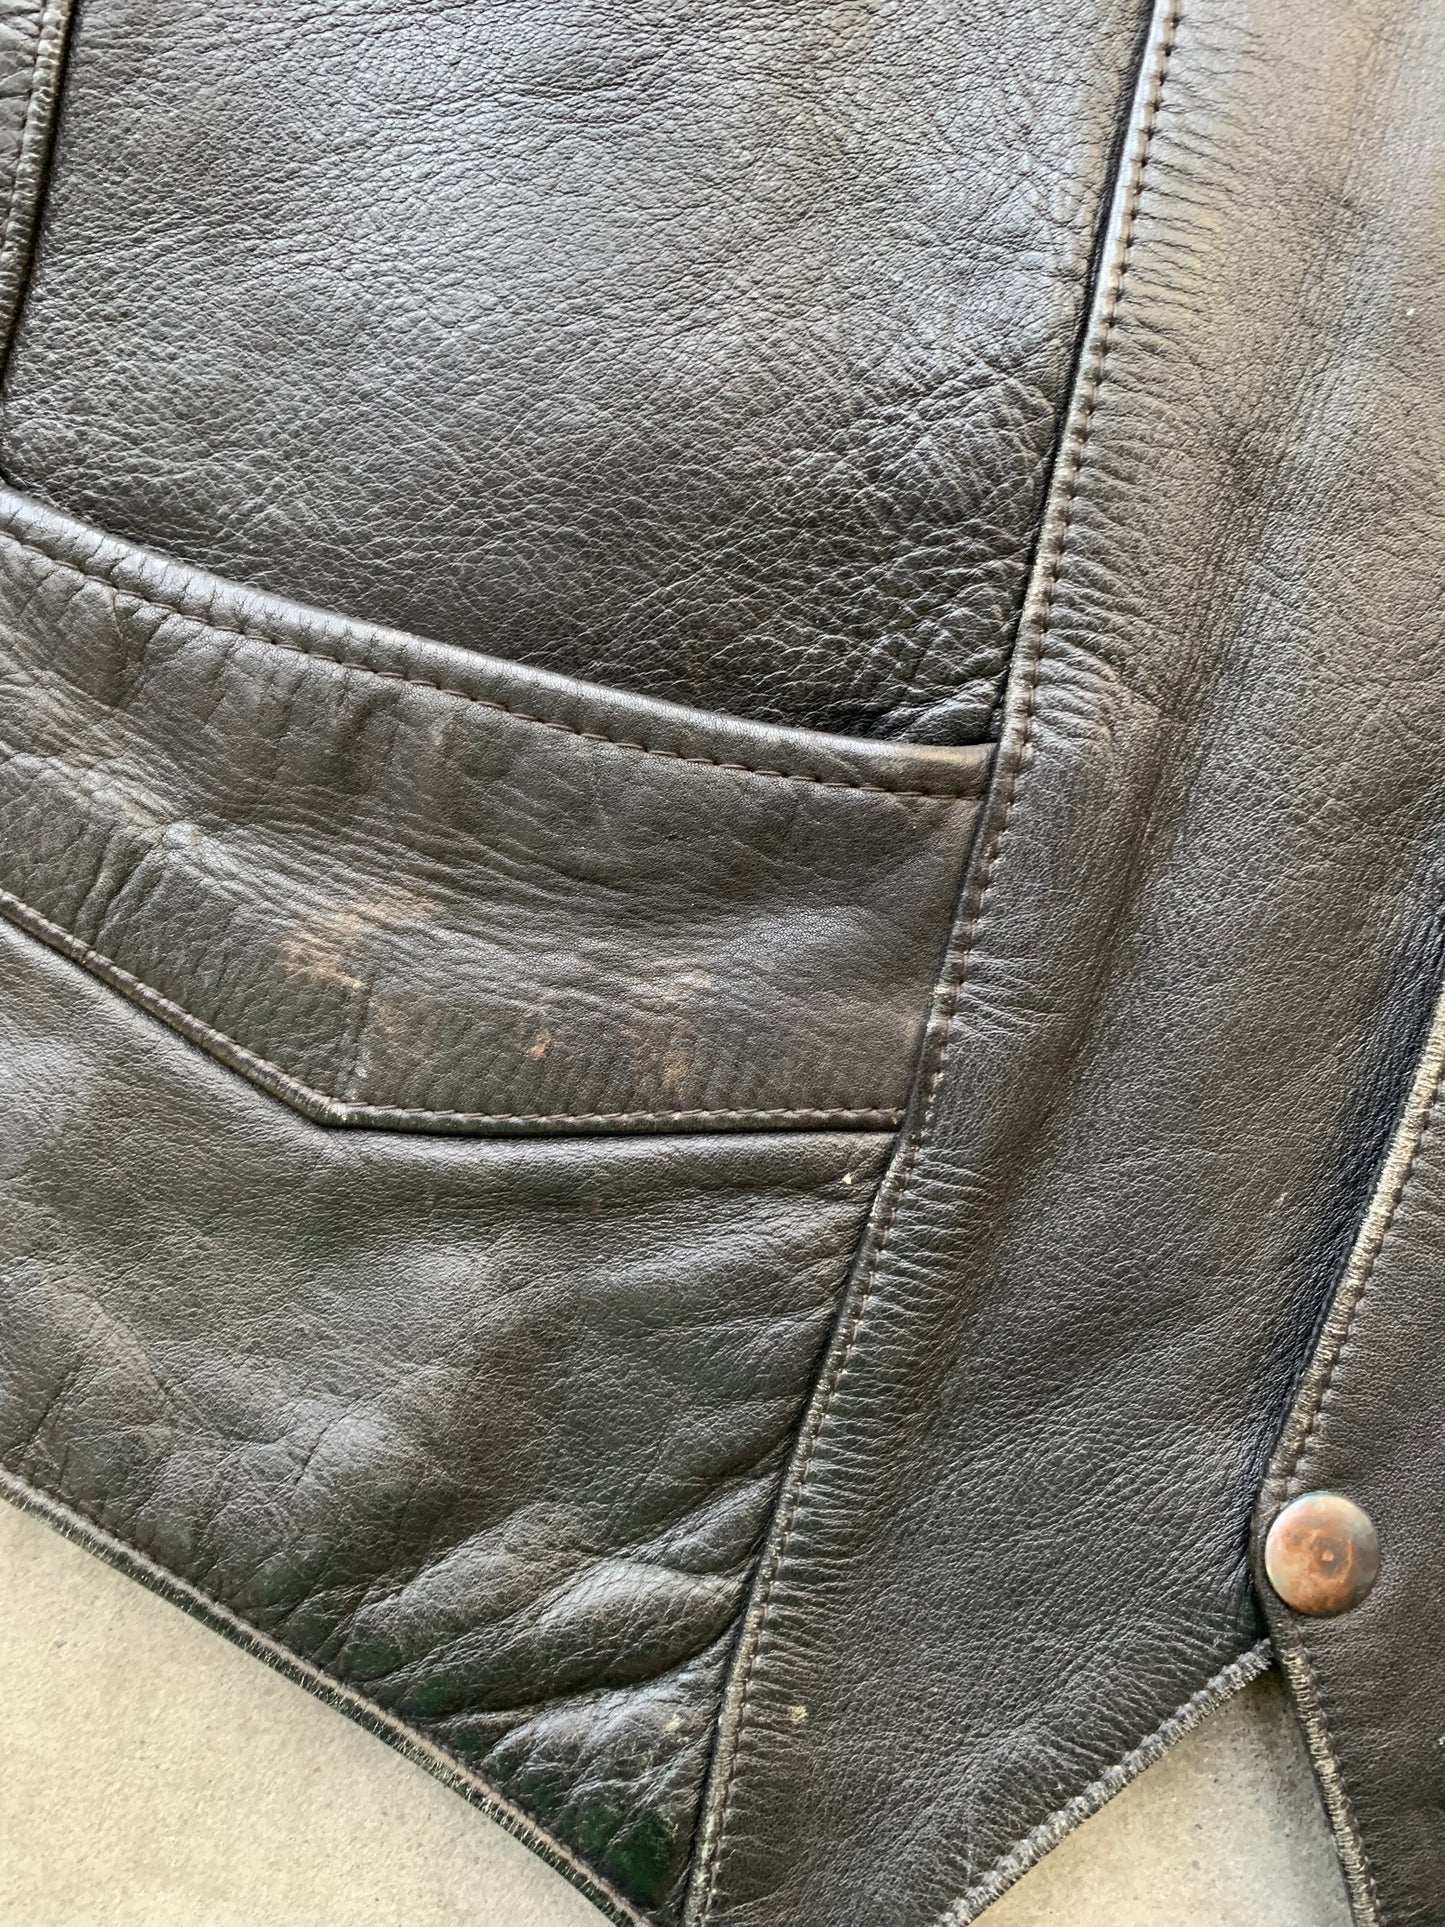 (XS) 90’s Harley Davidson Leather Vest